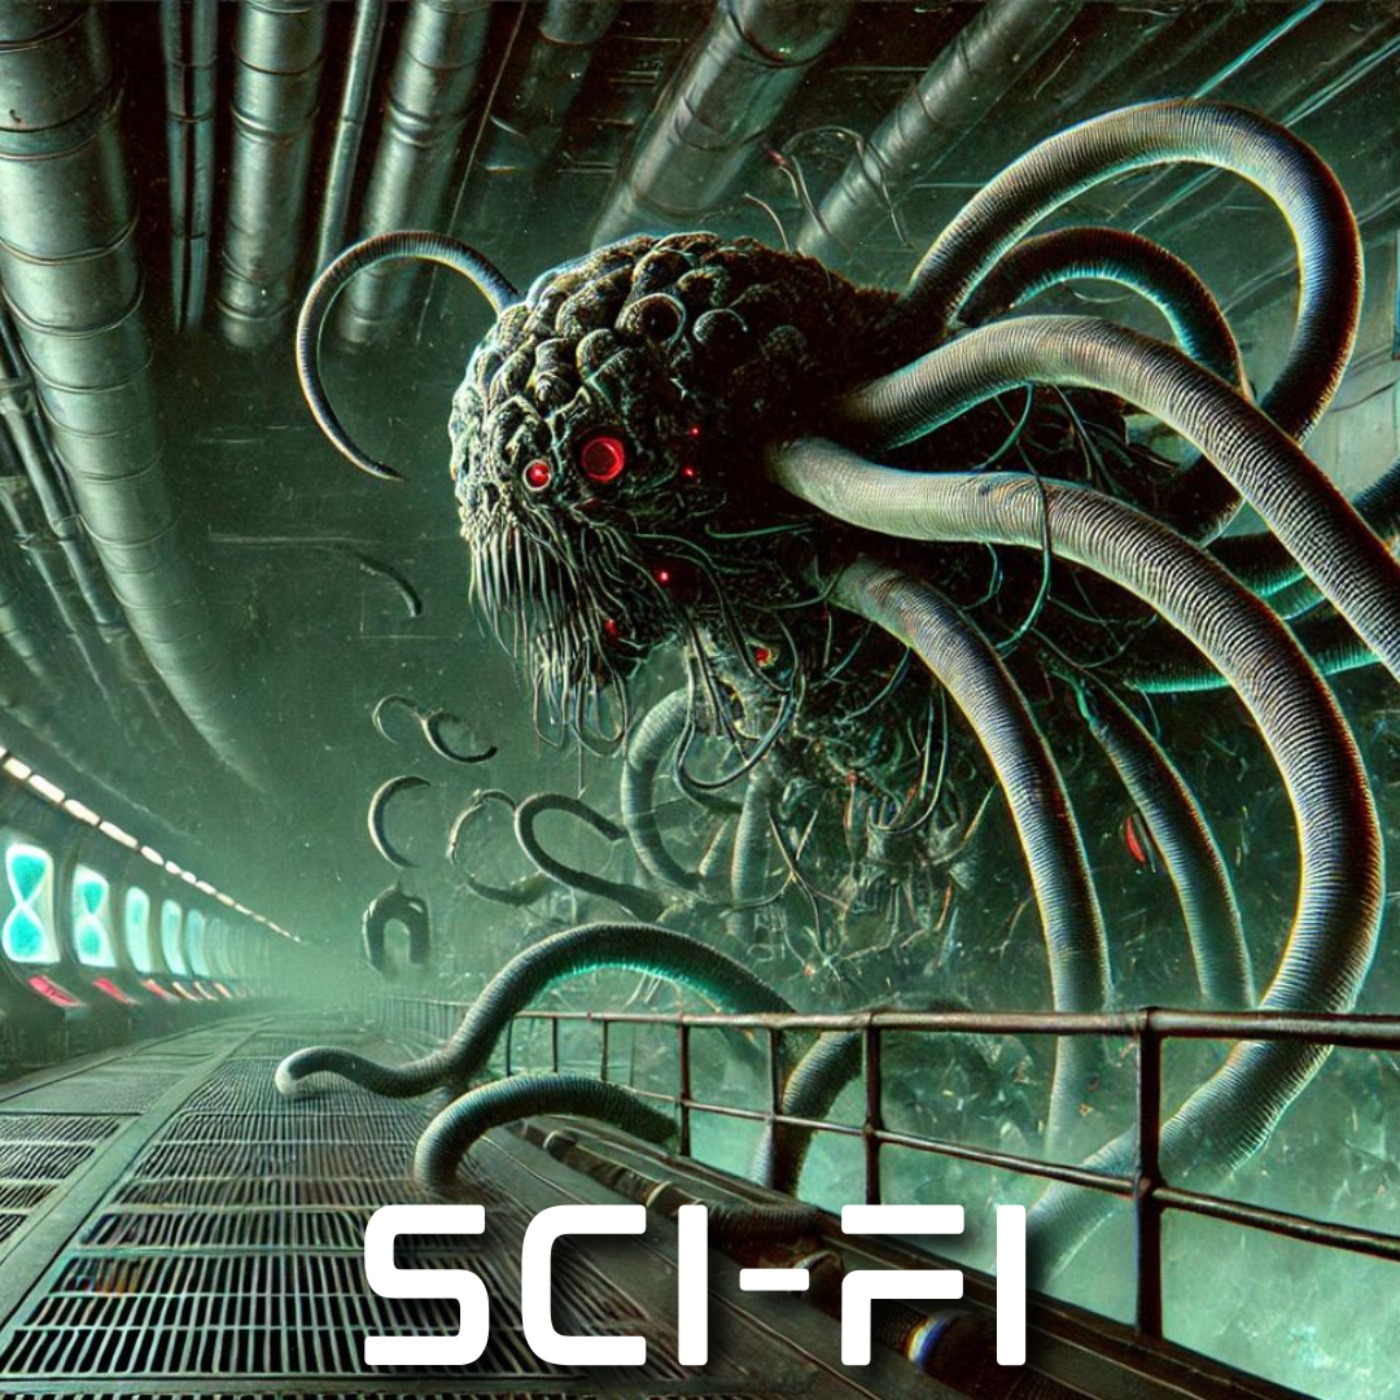 An Alien Organ Powers Our Ship. It Demands A Horrific Price | Sci-Fi Creepypasta Cosmic Horror